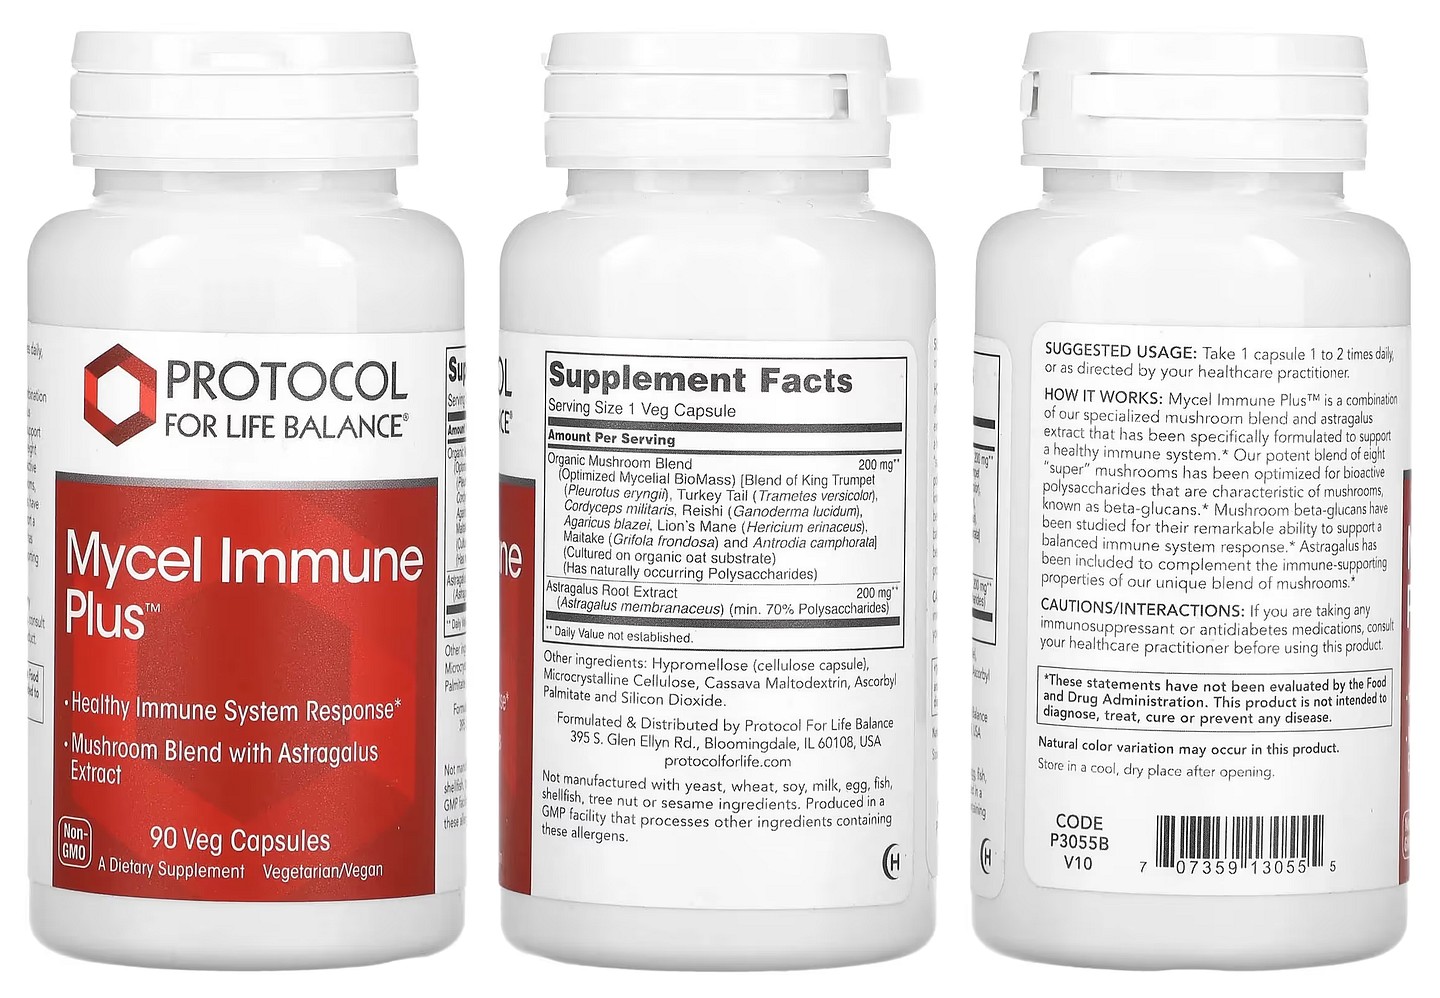 Protocol for Life Balance, Mycel Immune Plus packaging